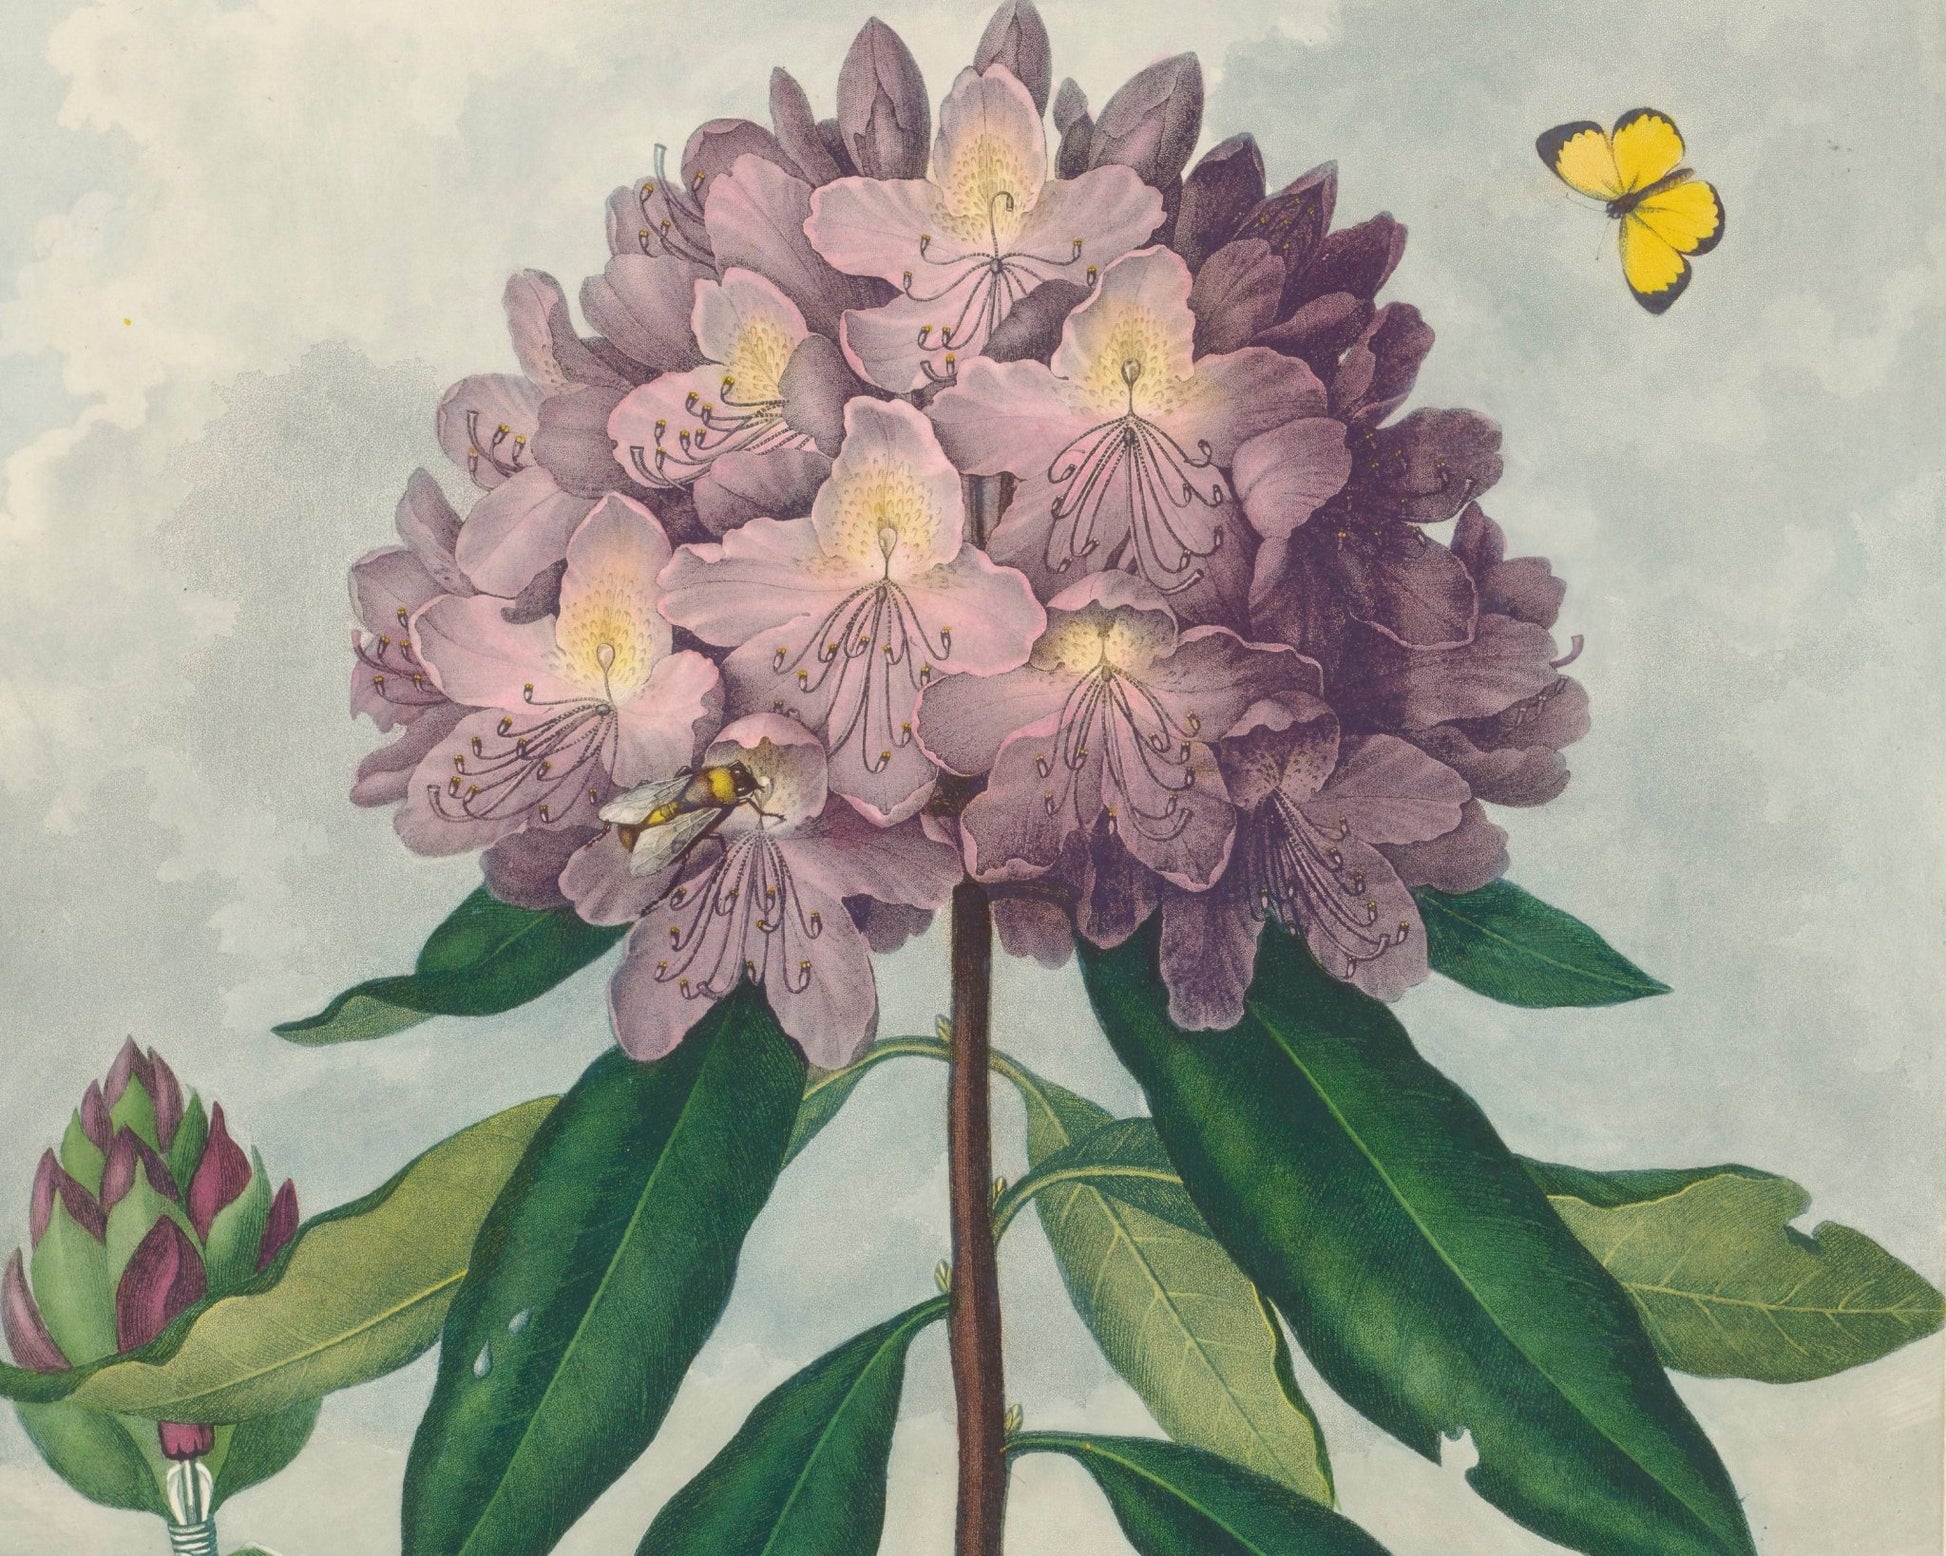 Vintage Botanical Illustration "The Pontic Rhododendron" (c.1799 - 1807) - Mabon Gallery